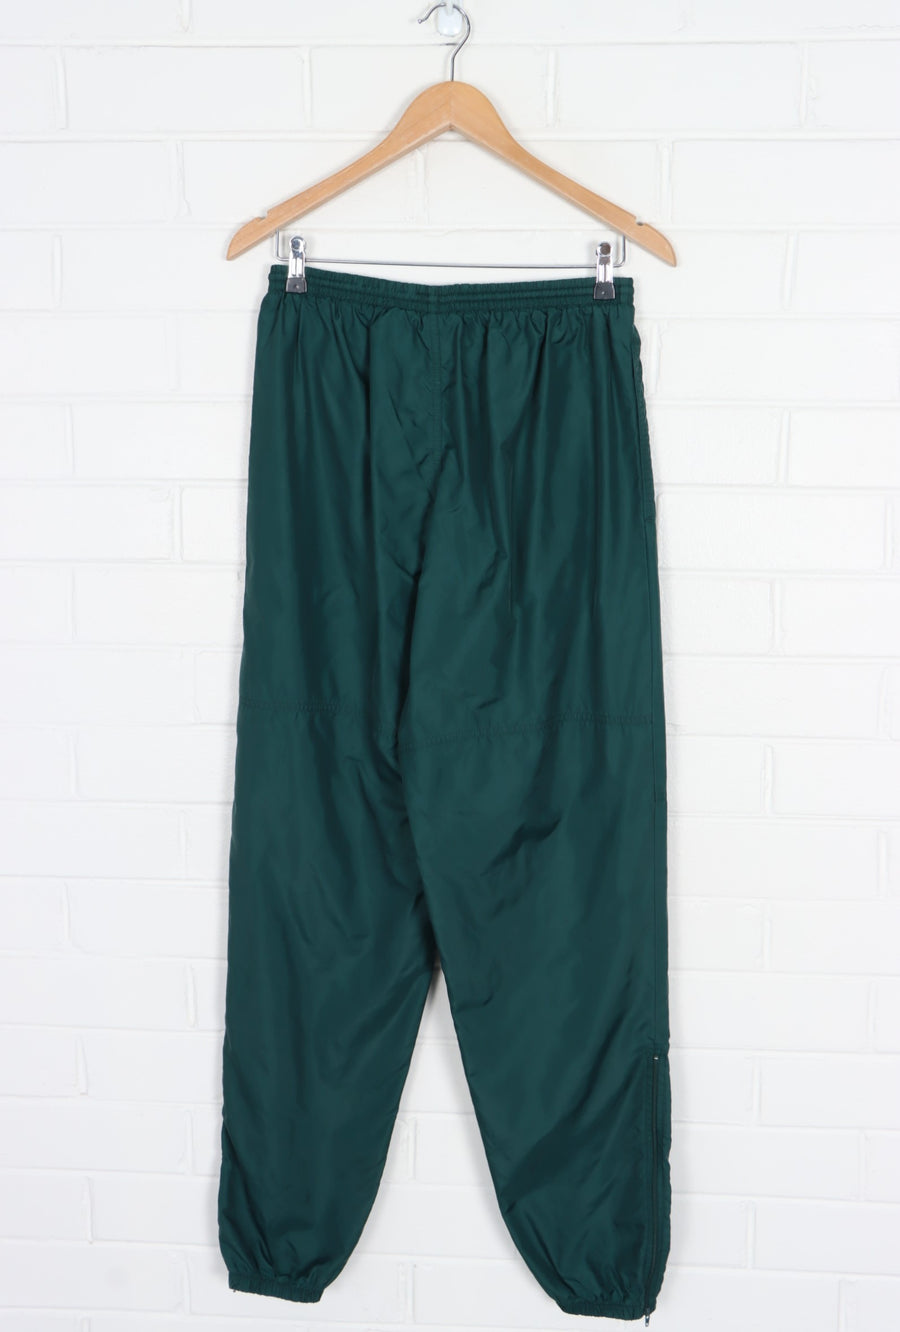 NIKE Dark Green Swoosh Logo Elastic Waist Track Pants (L)